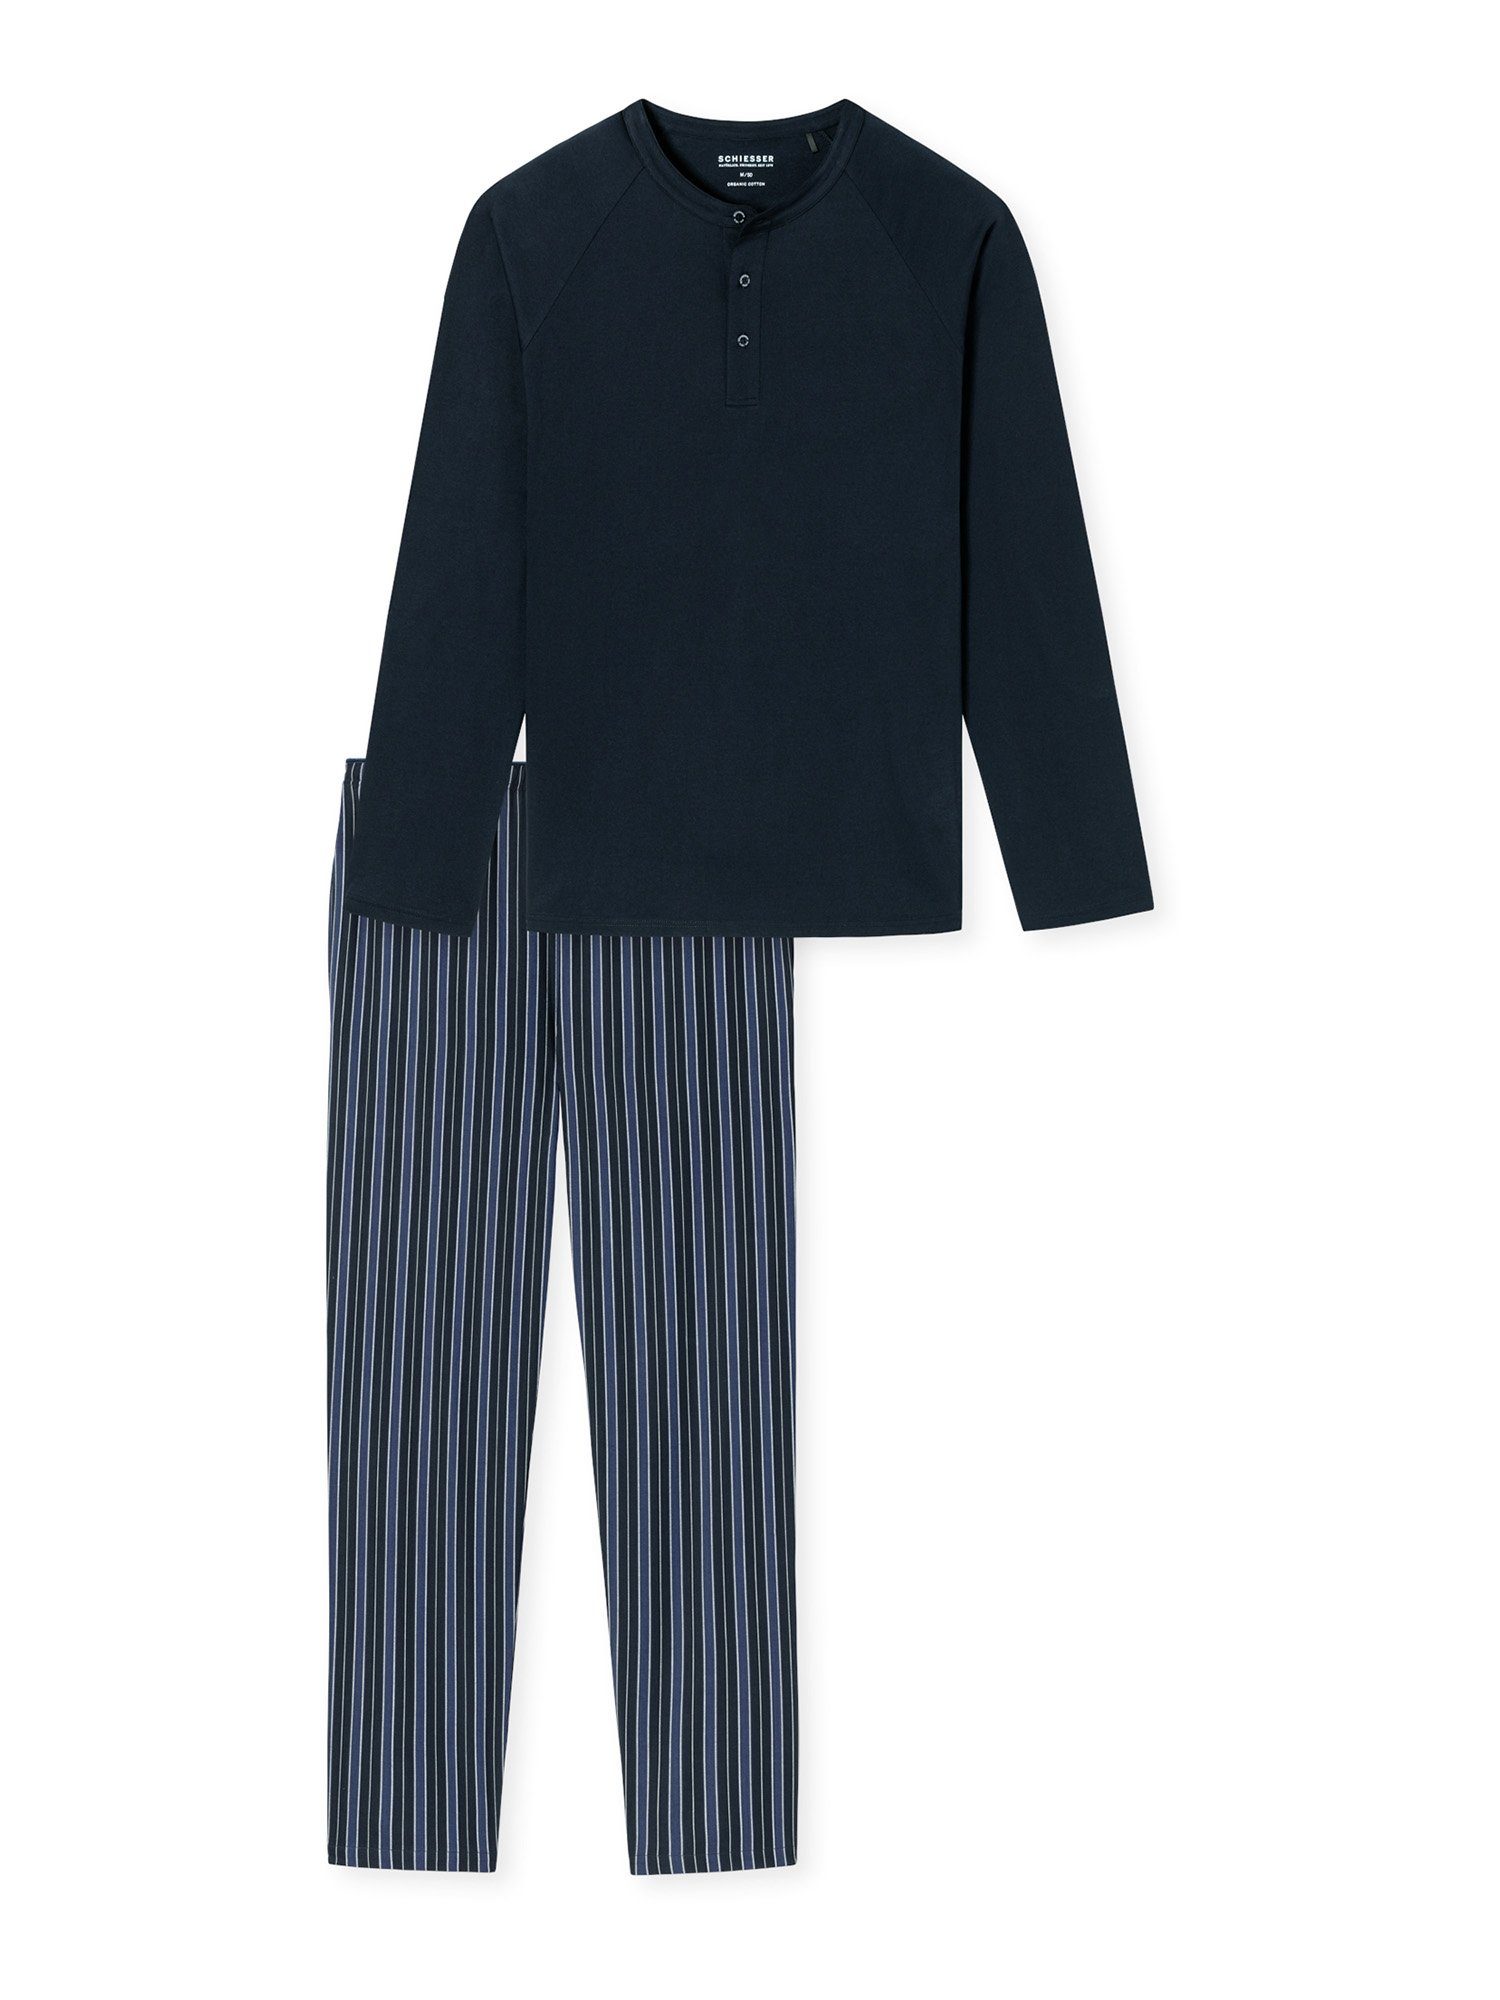 Pyjama Premium Selected schlafmode schlafanzug Schiesser pyjama nachtblau